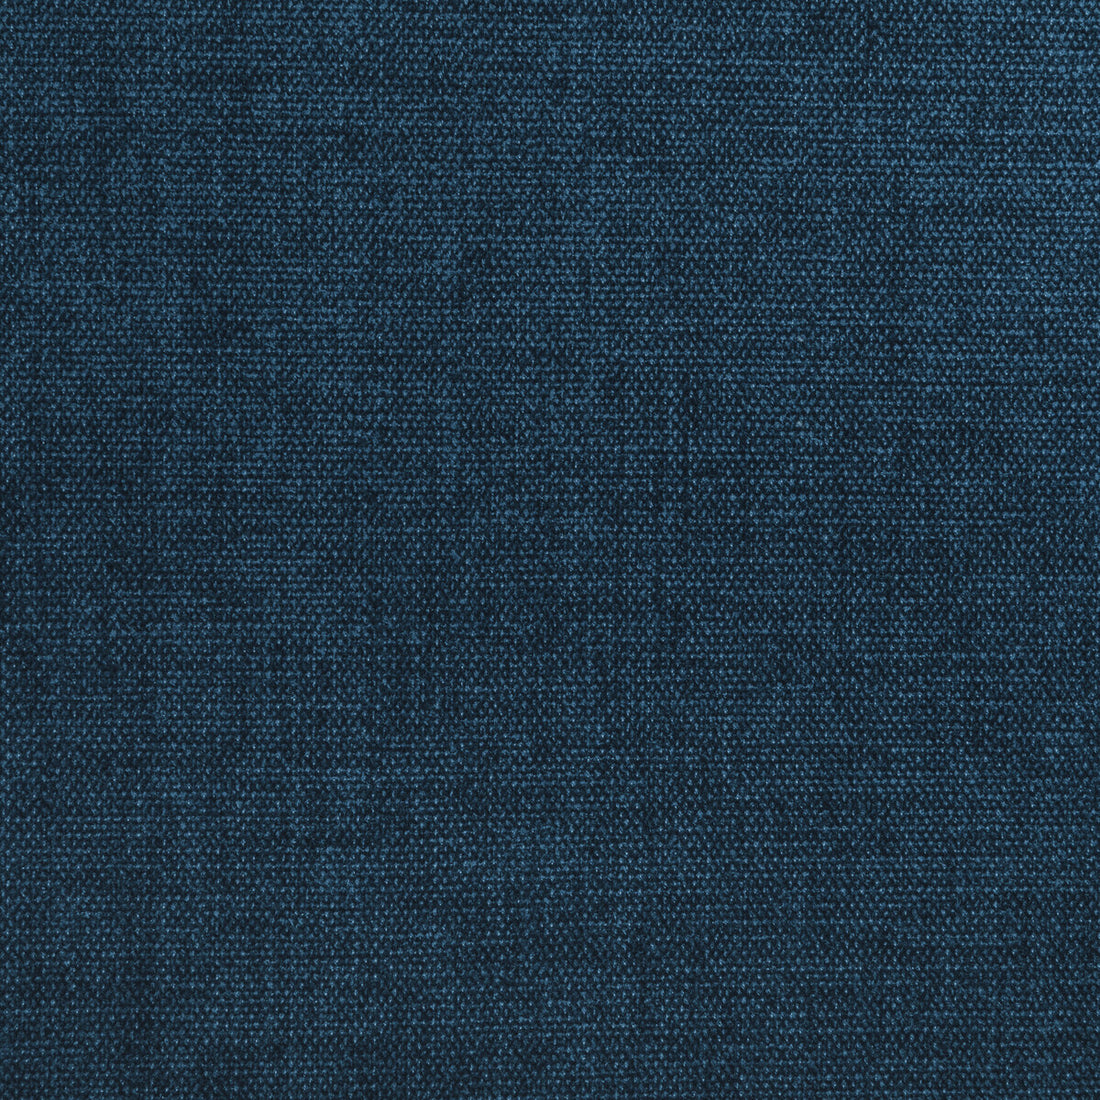 Kravet Smart fabric in 34959-5055 color - pattern 34959.5055.0 - by Kravet Smart in the Performance Kravetarmor collection